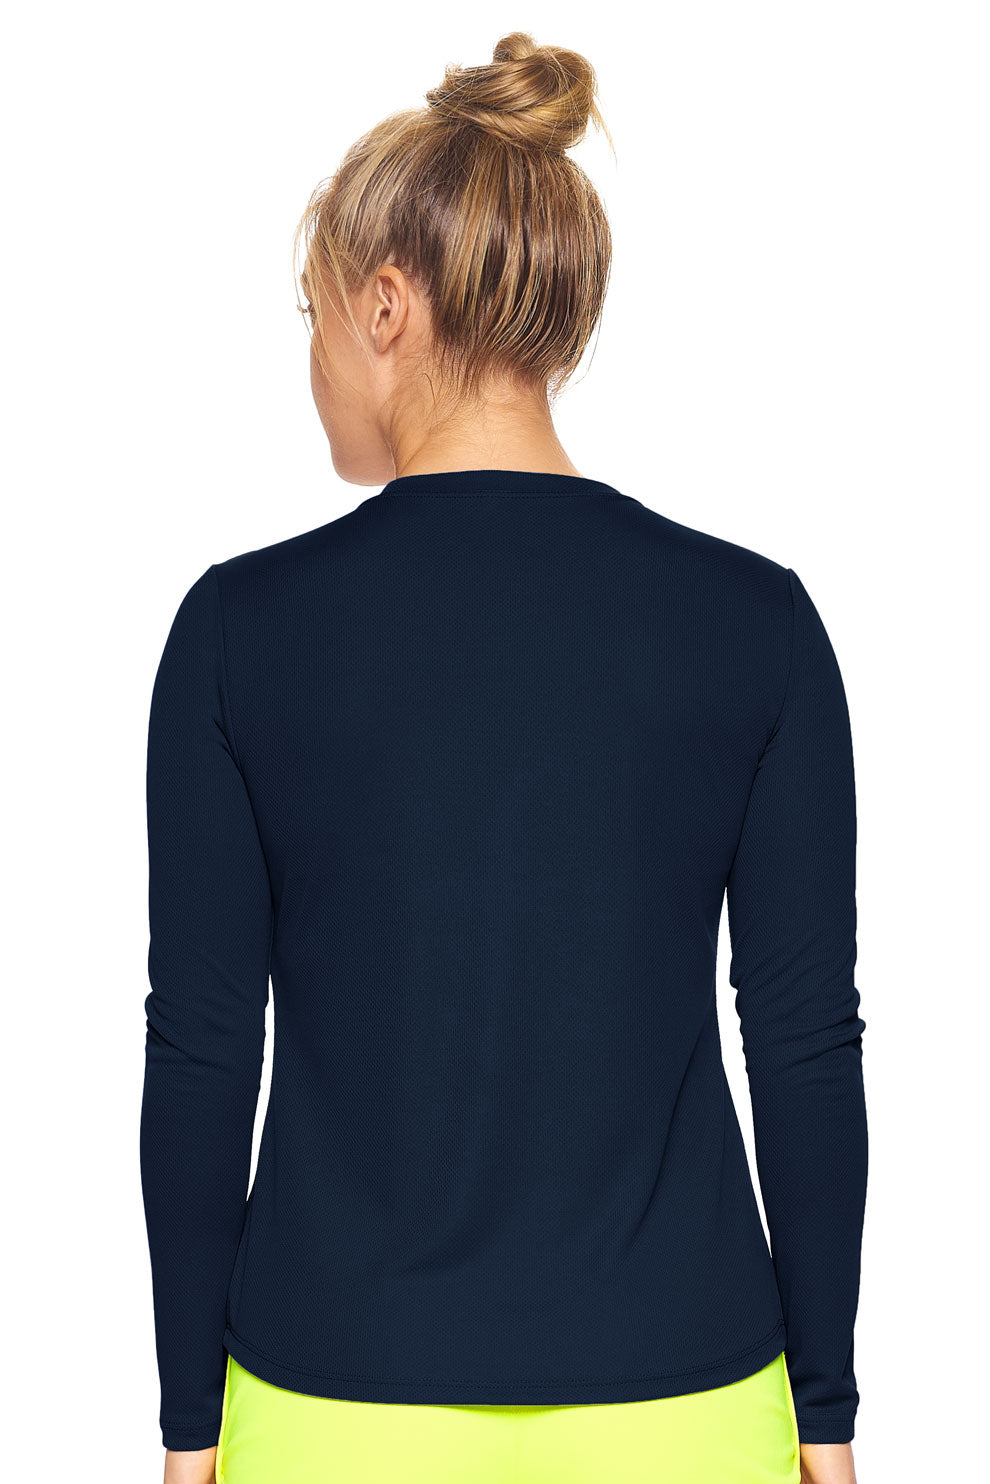 Expert Brand Wholesale Women's Oxymesh Crewneck Performance Tee Imported AJ301 Navy Blue image 3#navy-blue